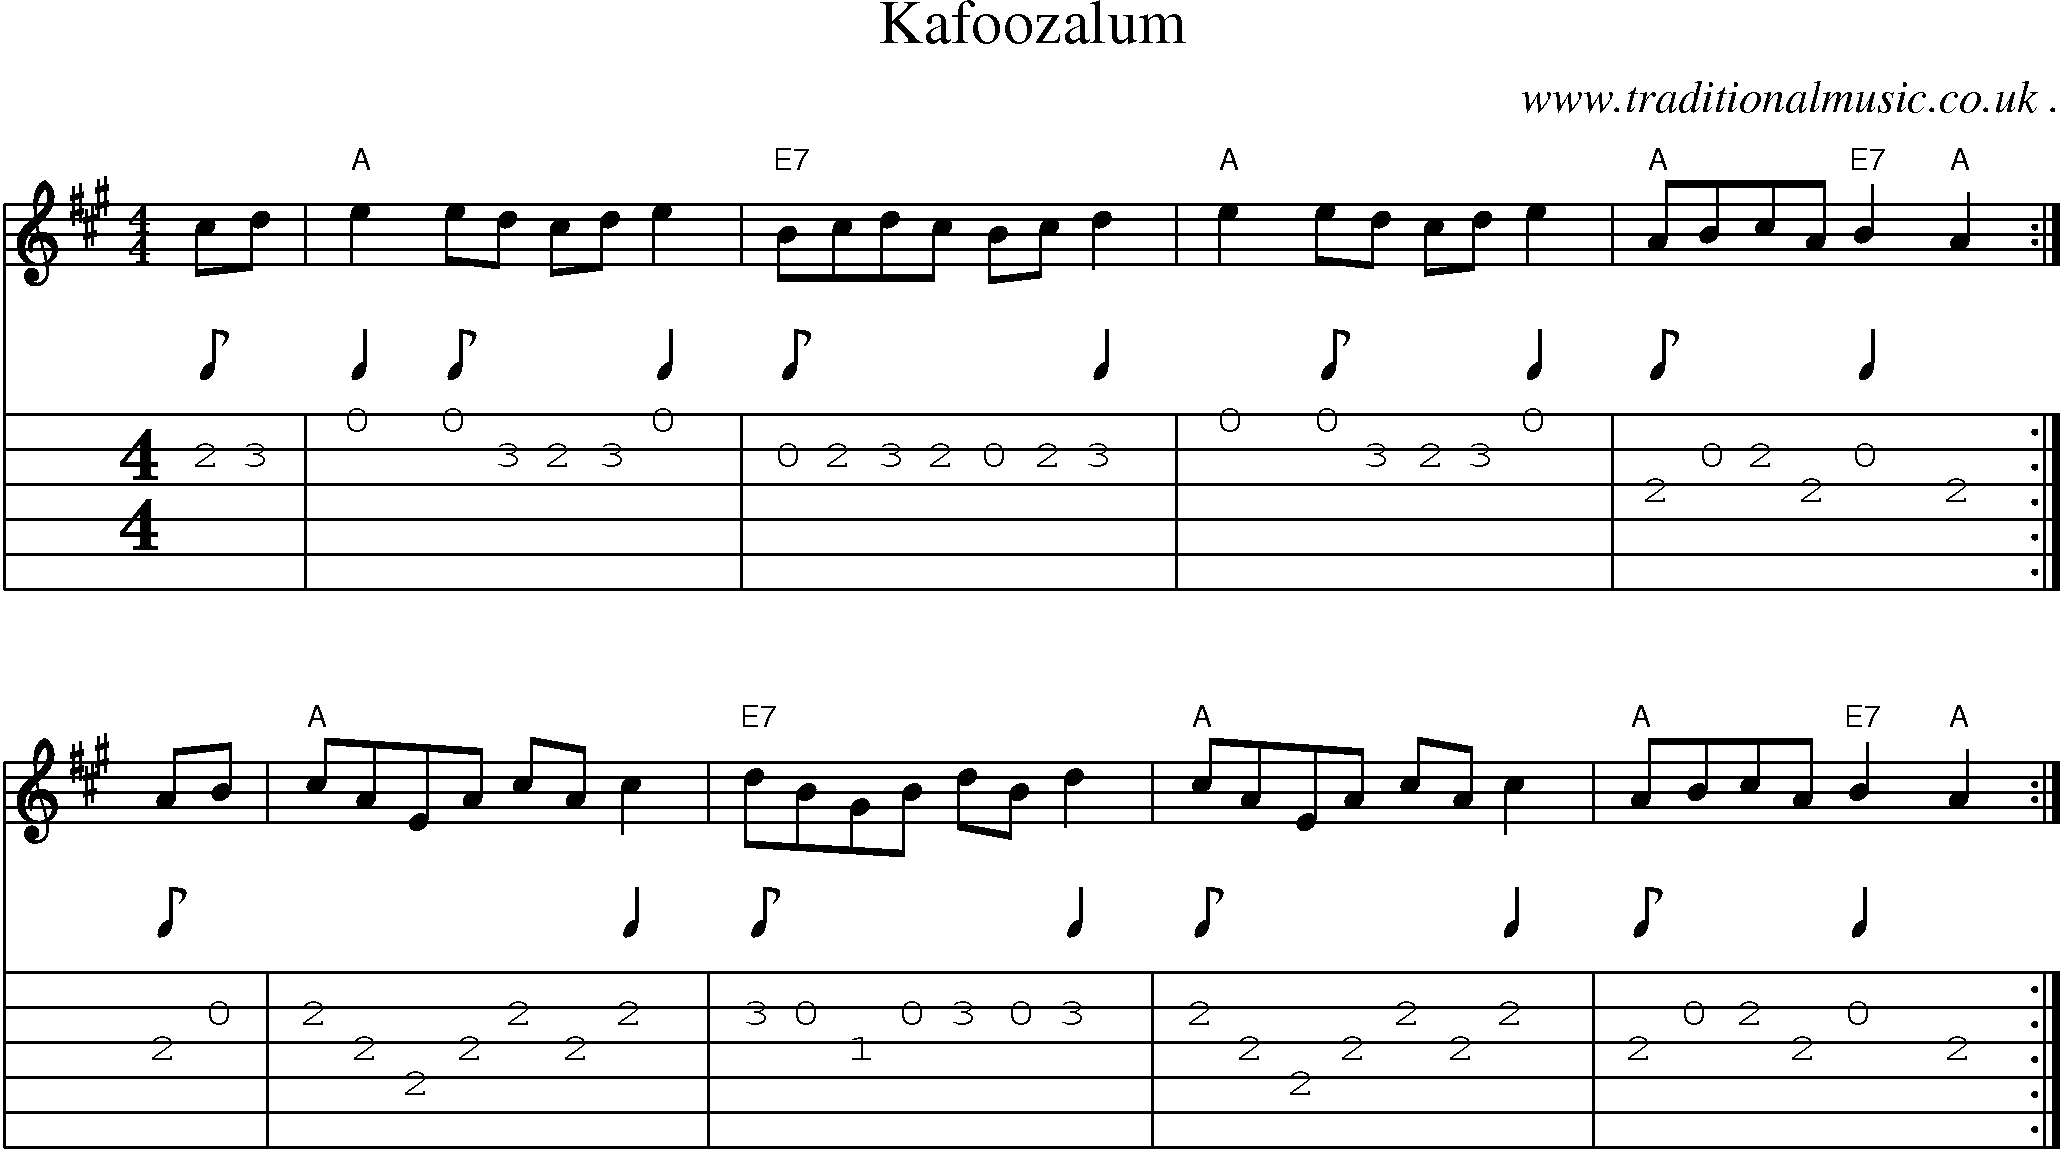 Sheet-Music and Guitar Tabs for Kafoozalum